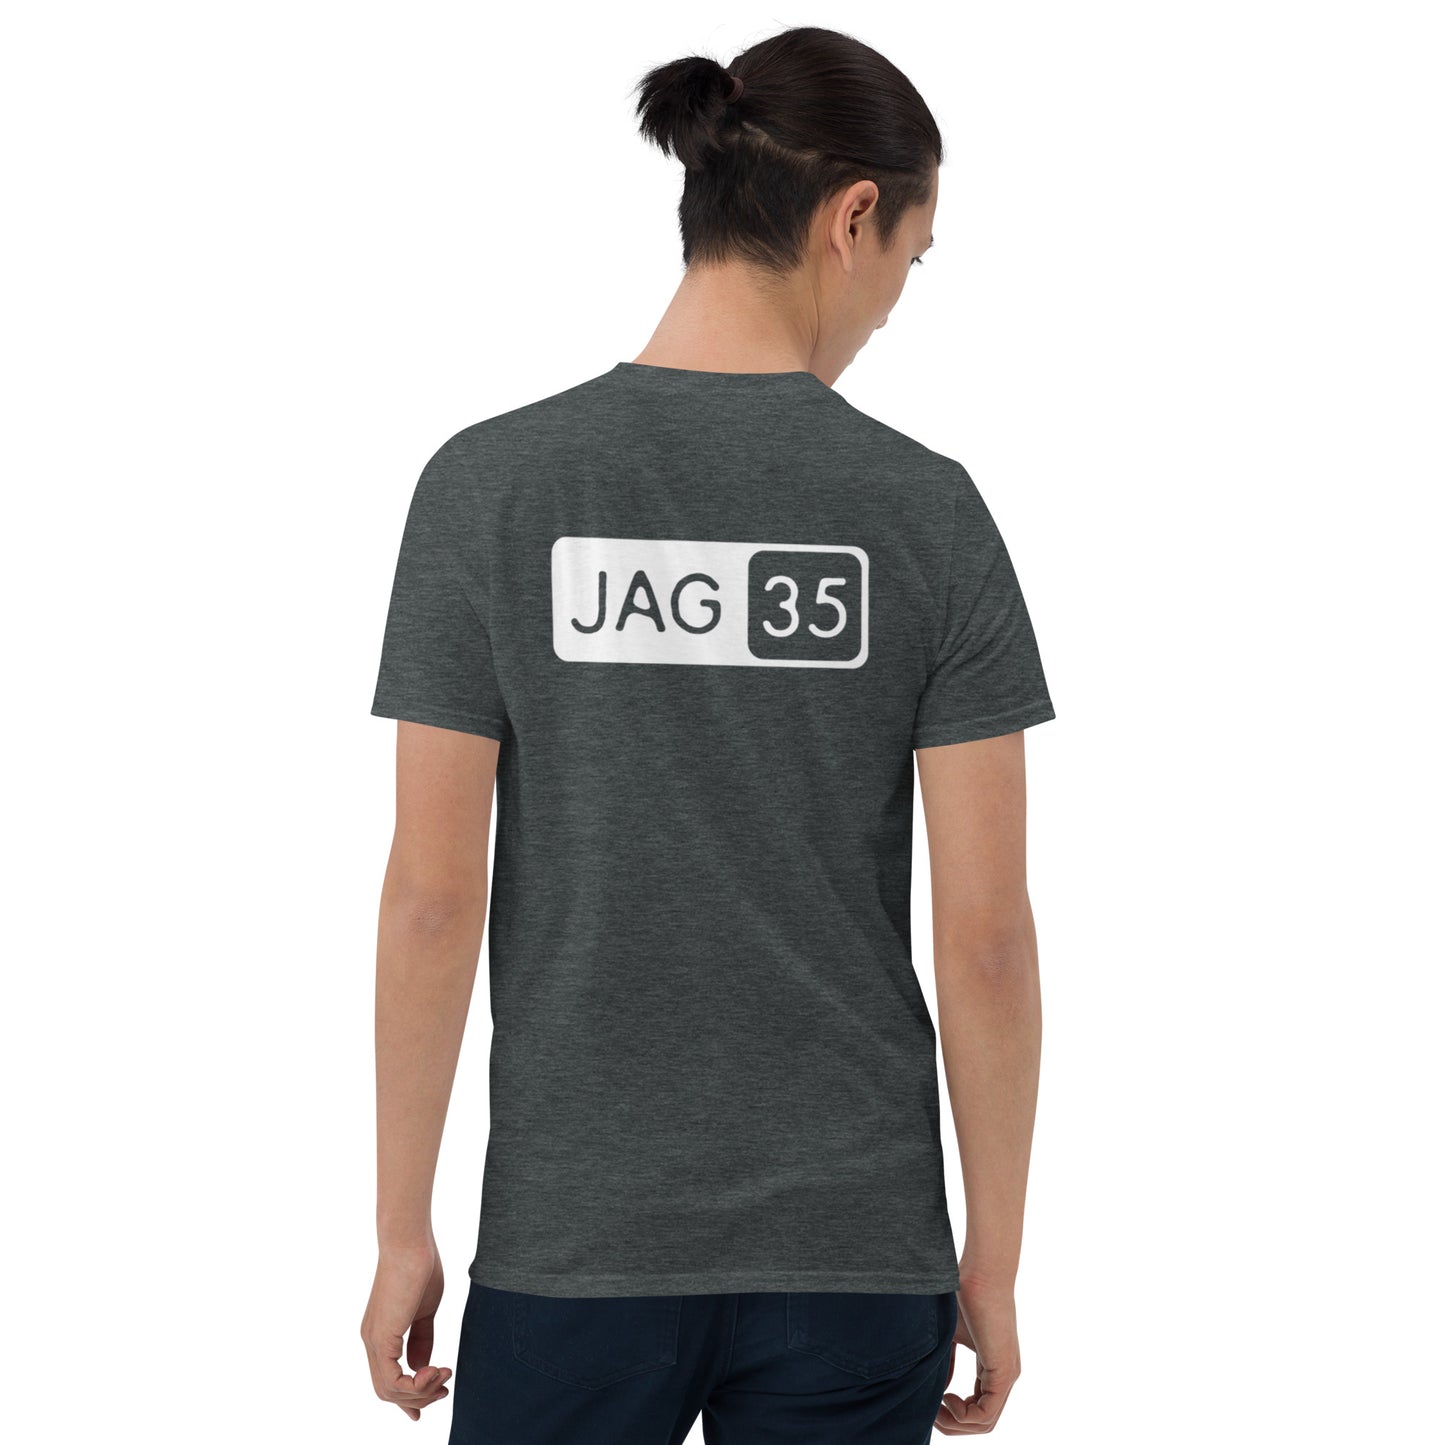 JAG35 Voids Warranties T-shirt (Short-Sleeve Unisex)